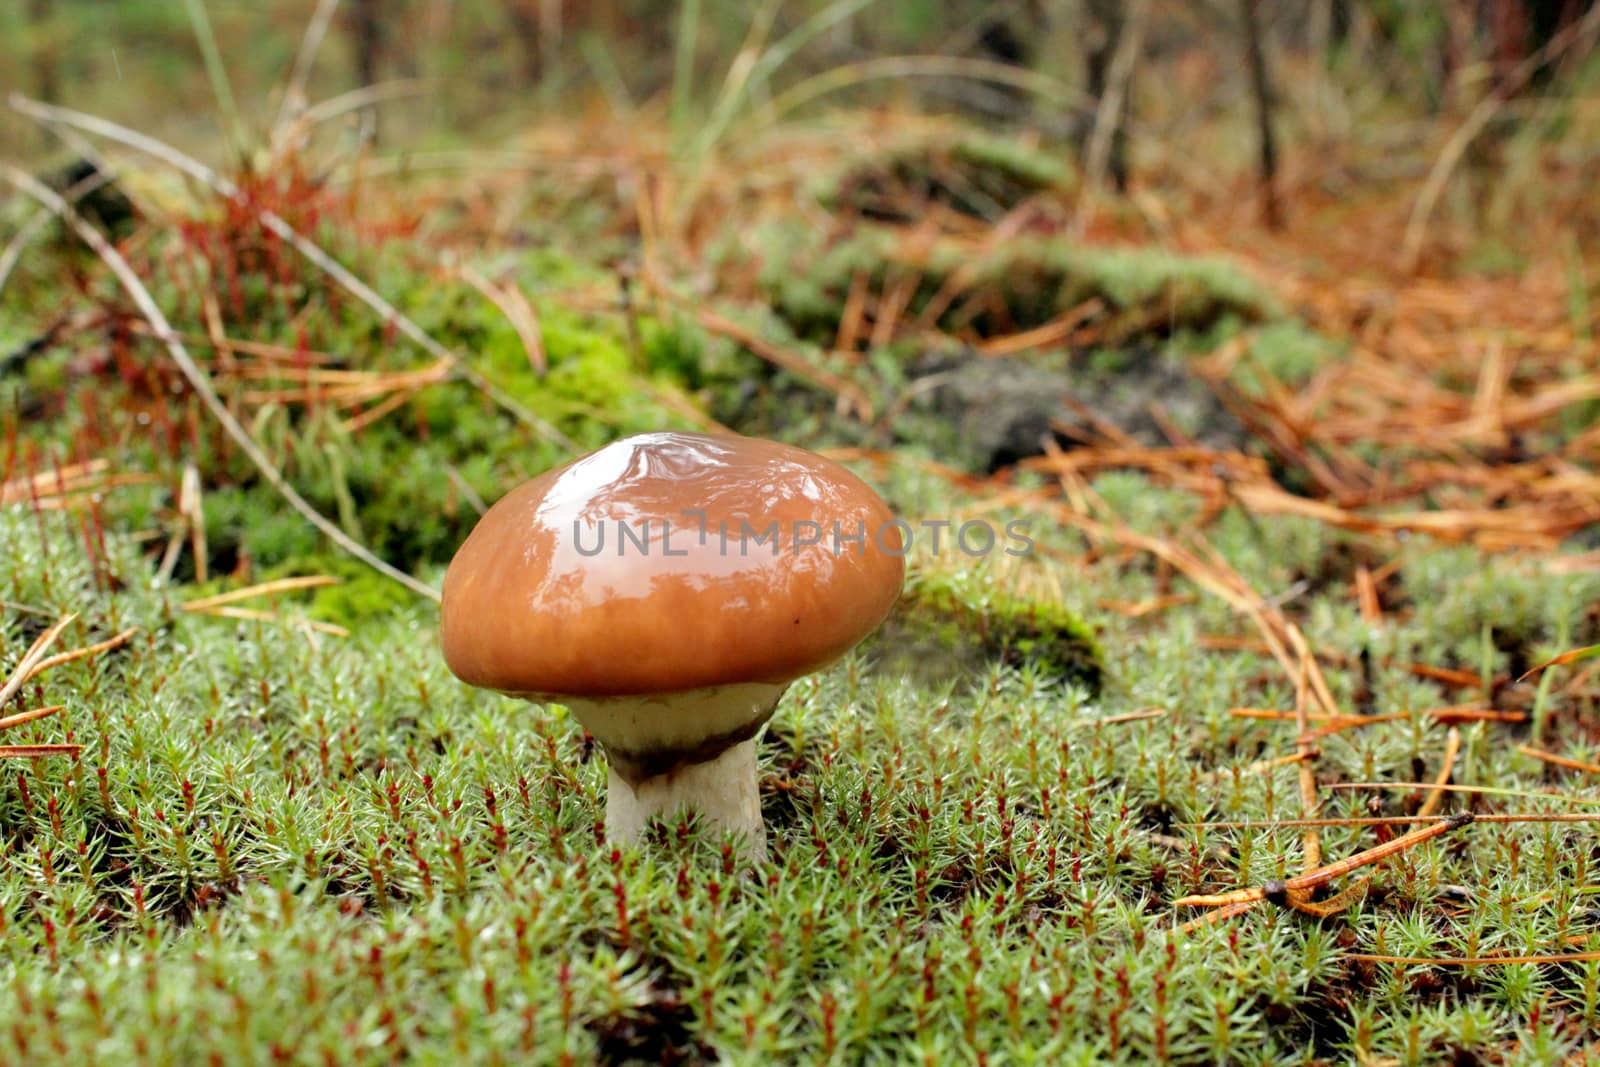 some nice mushroom in the green moss